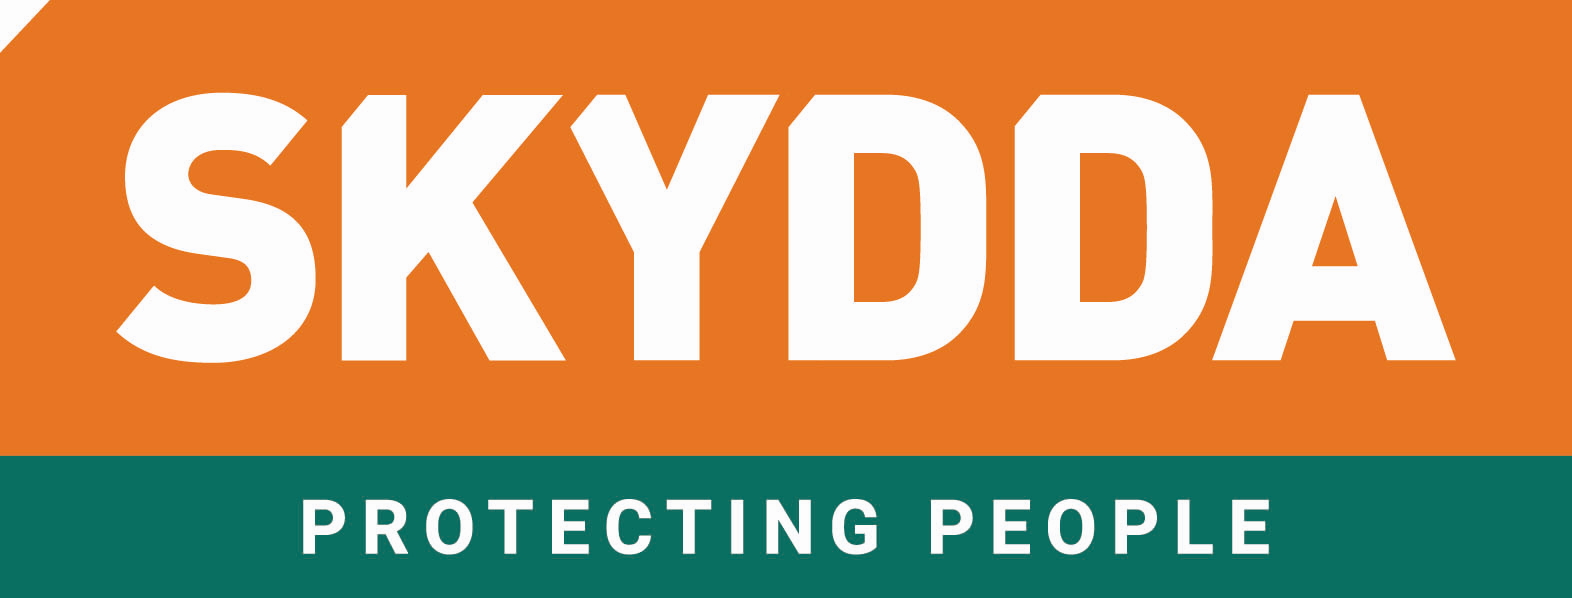 SKYDDA PROTECTING PEOPLE